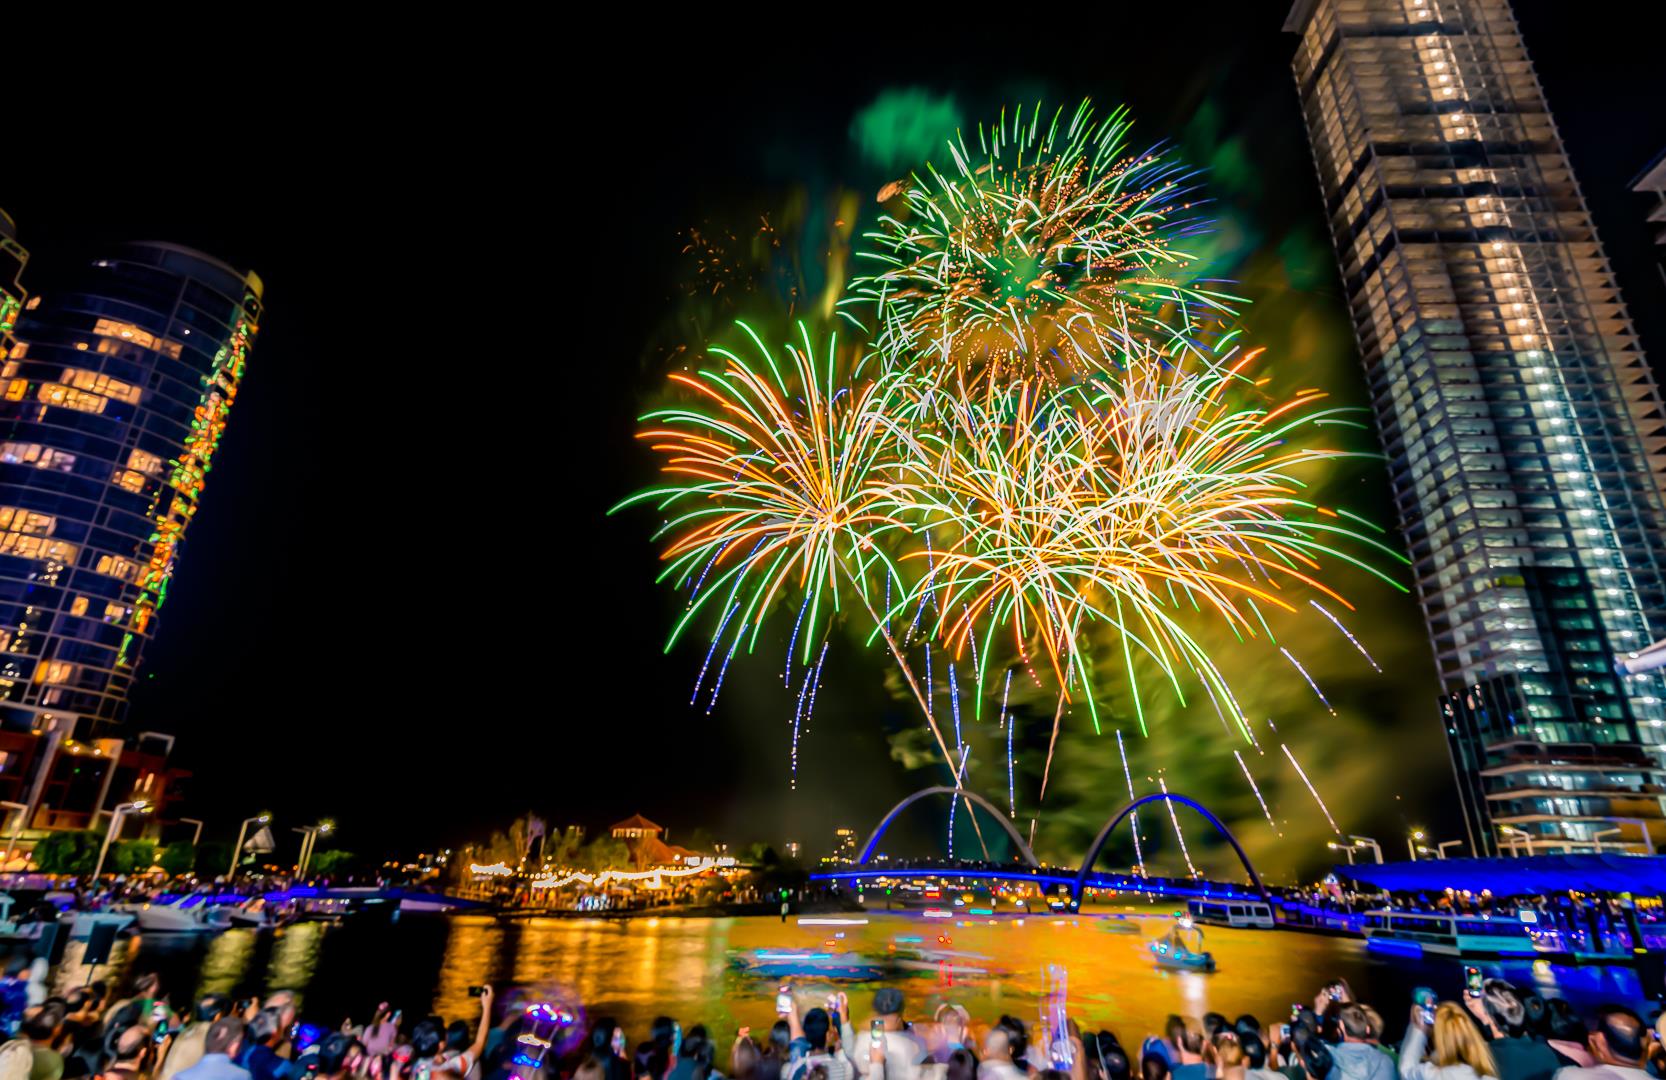 Fireworks over Elizabeth Quay